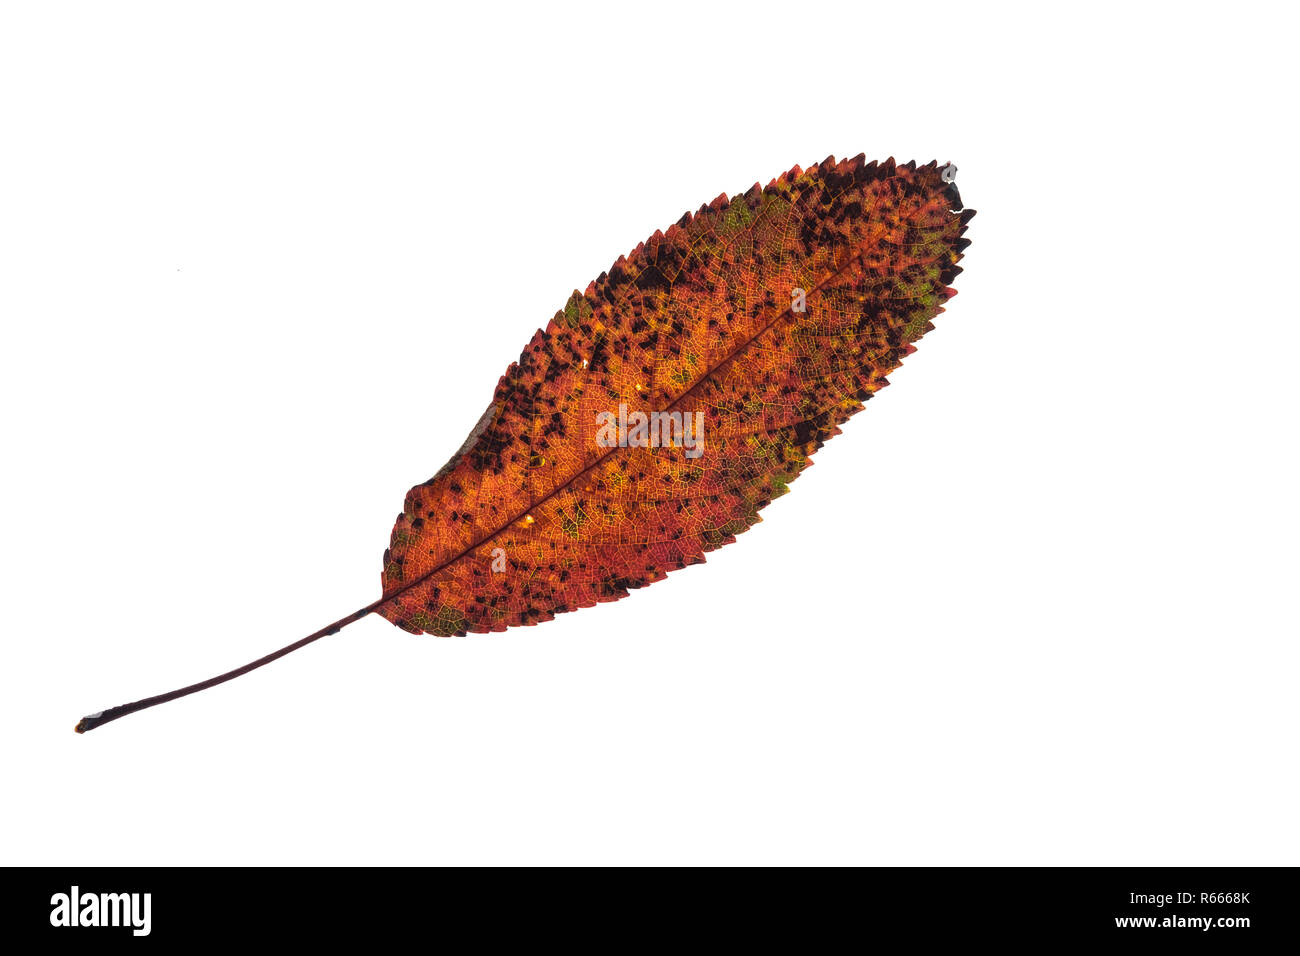 fruit tree leaf elongated serrated in orange brown coloring Stock Photo